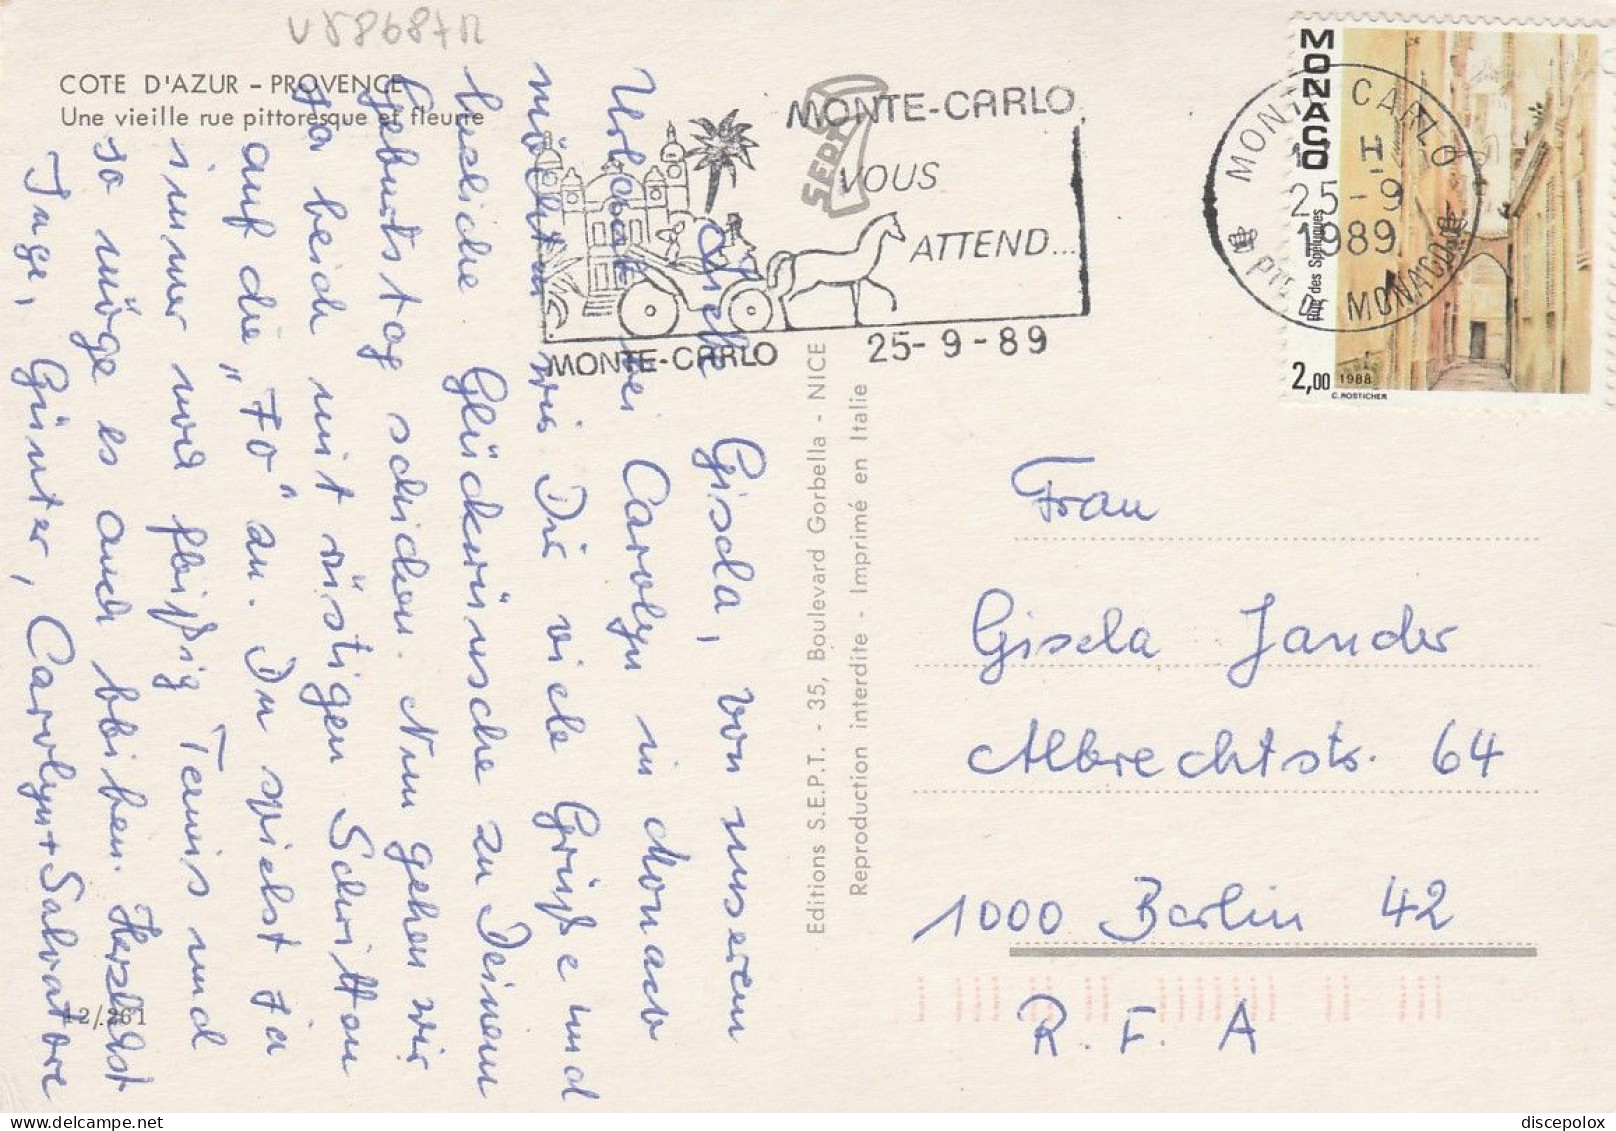 U5868 Monaco - 2 Francs Rue Des Spelugues - Nice Stamps Timbres Francobolli / Viaggiata 1989 - Lettres & Documents